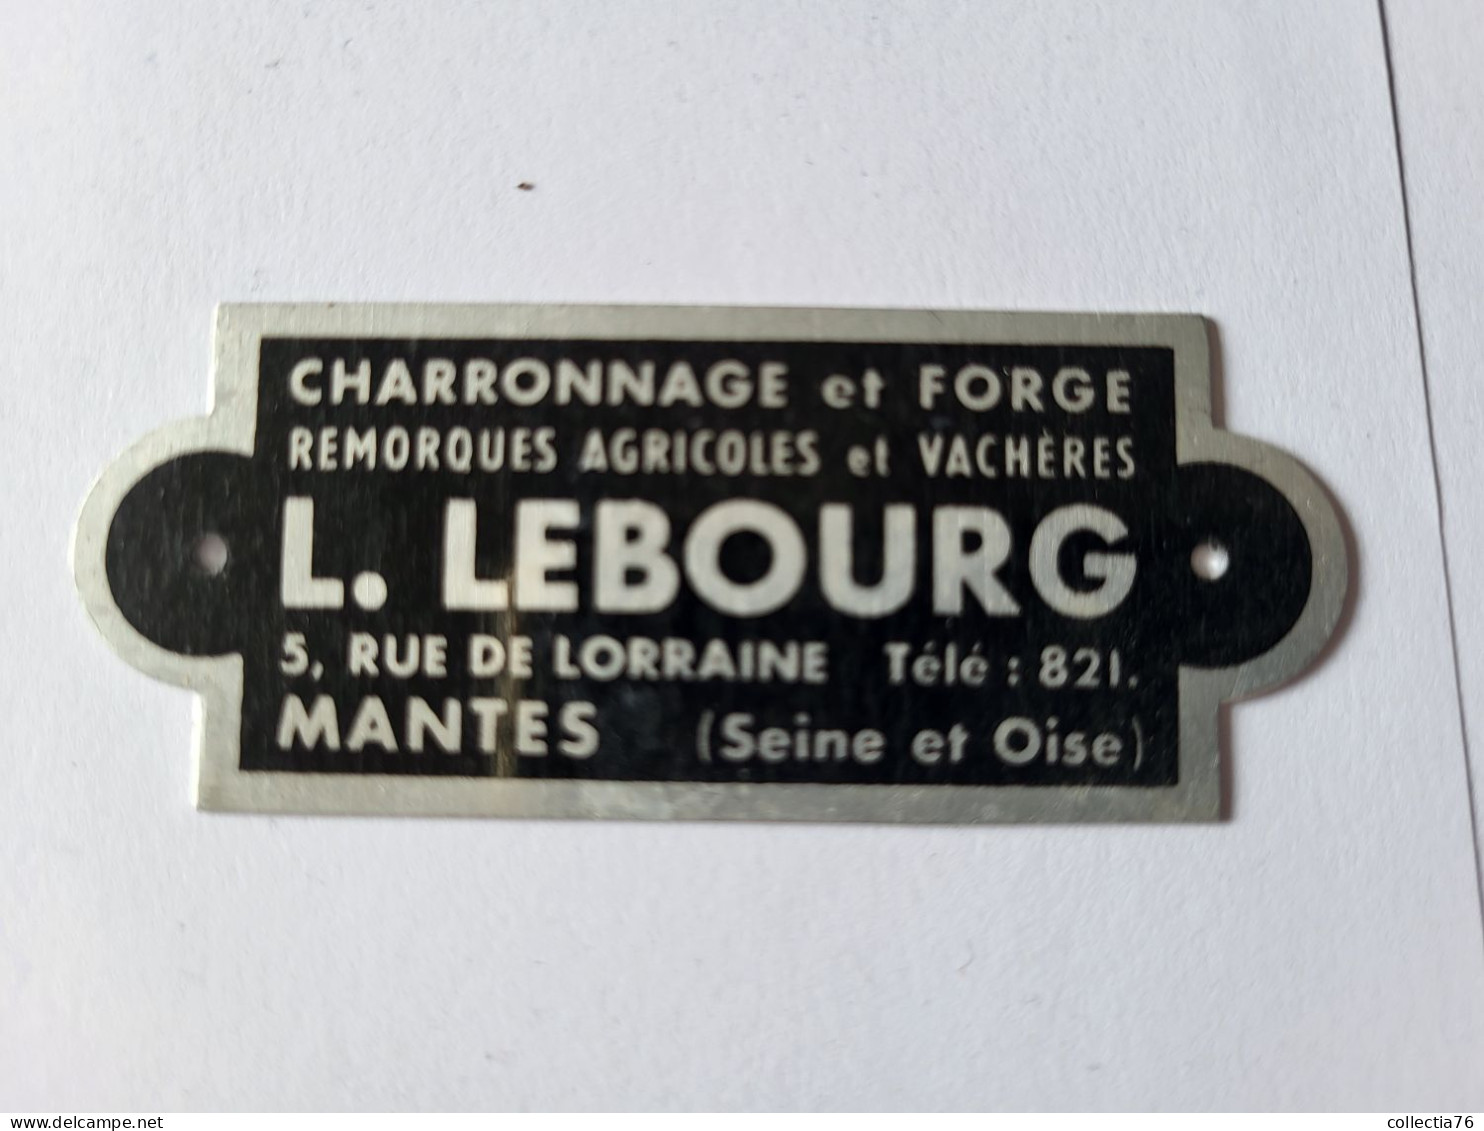 PLAQUE ALUMINIUM 78 YVELINES MANTES LEBOURG CHARRON CHARRONNAGE FORGE REMORQUES VACHERES - Farm